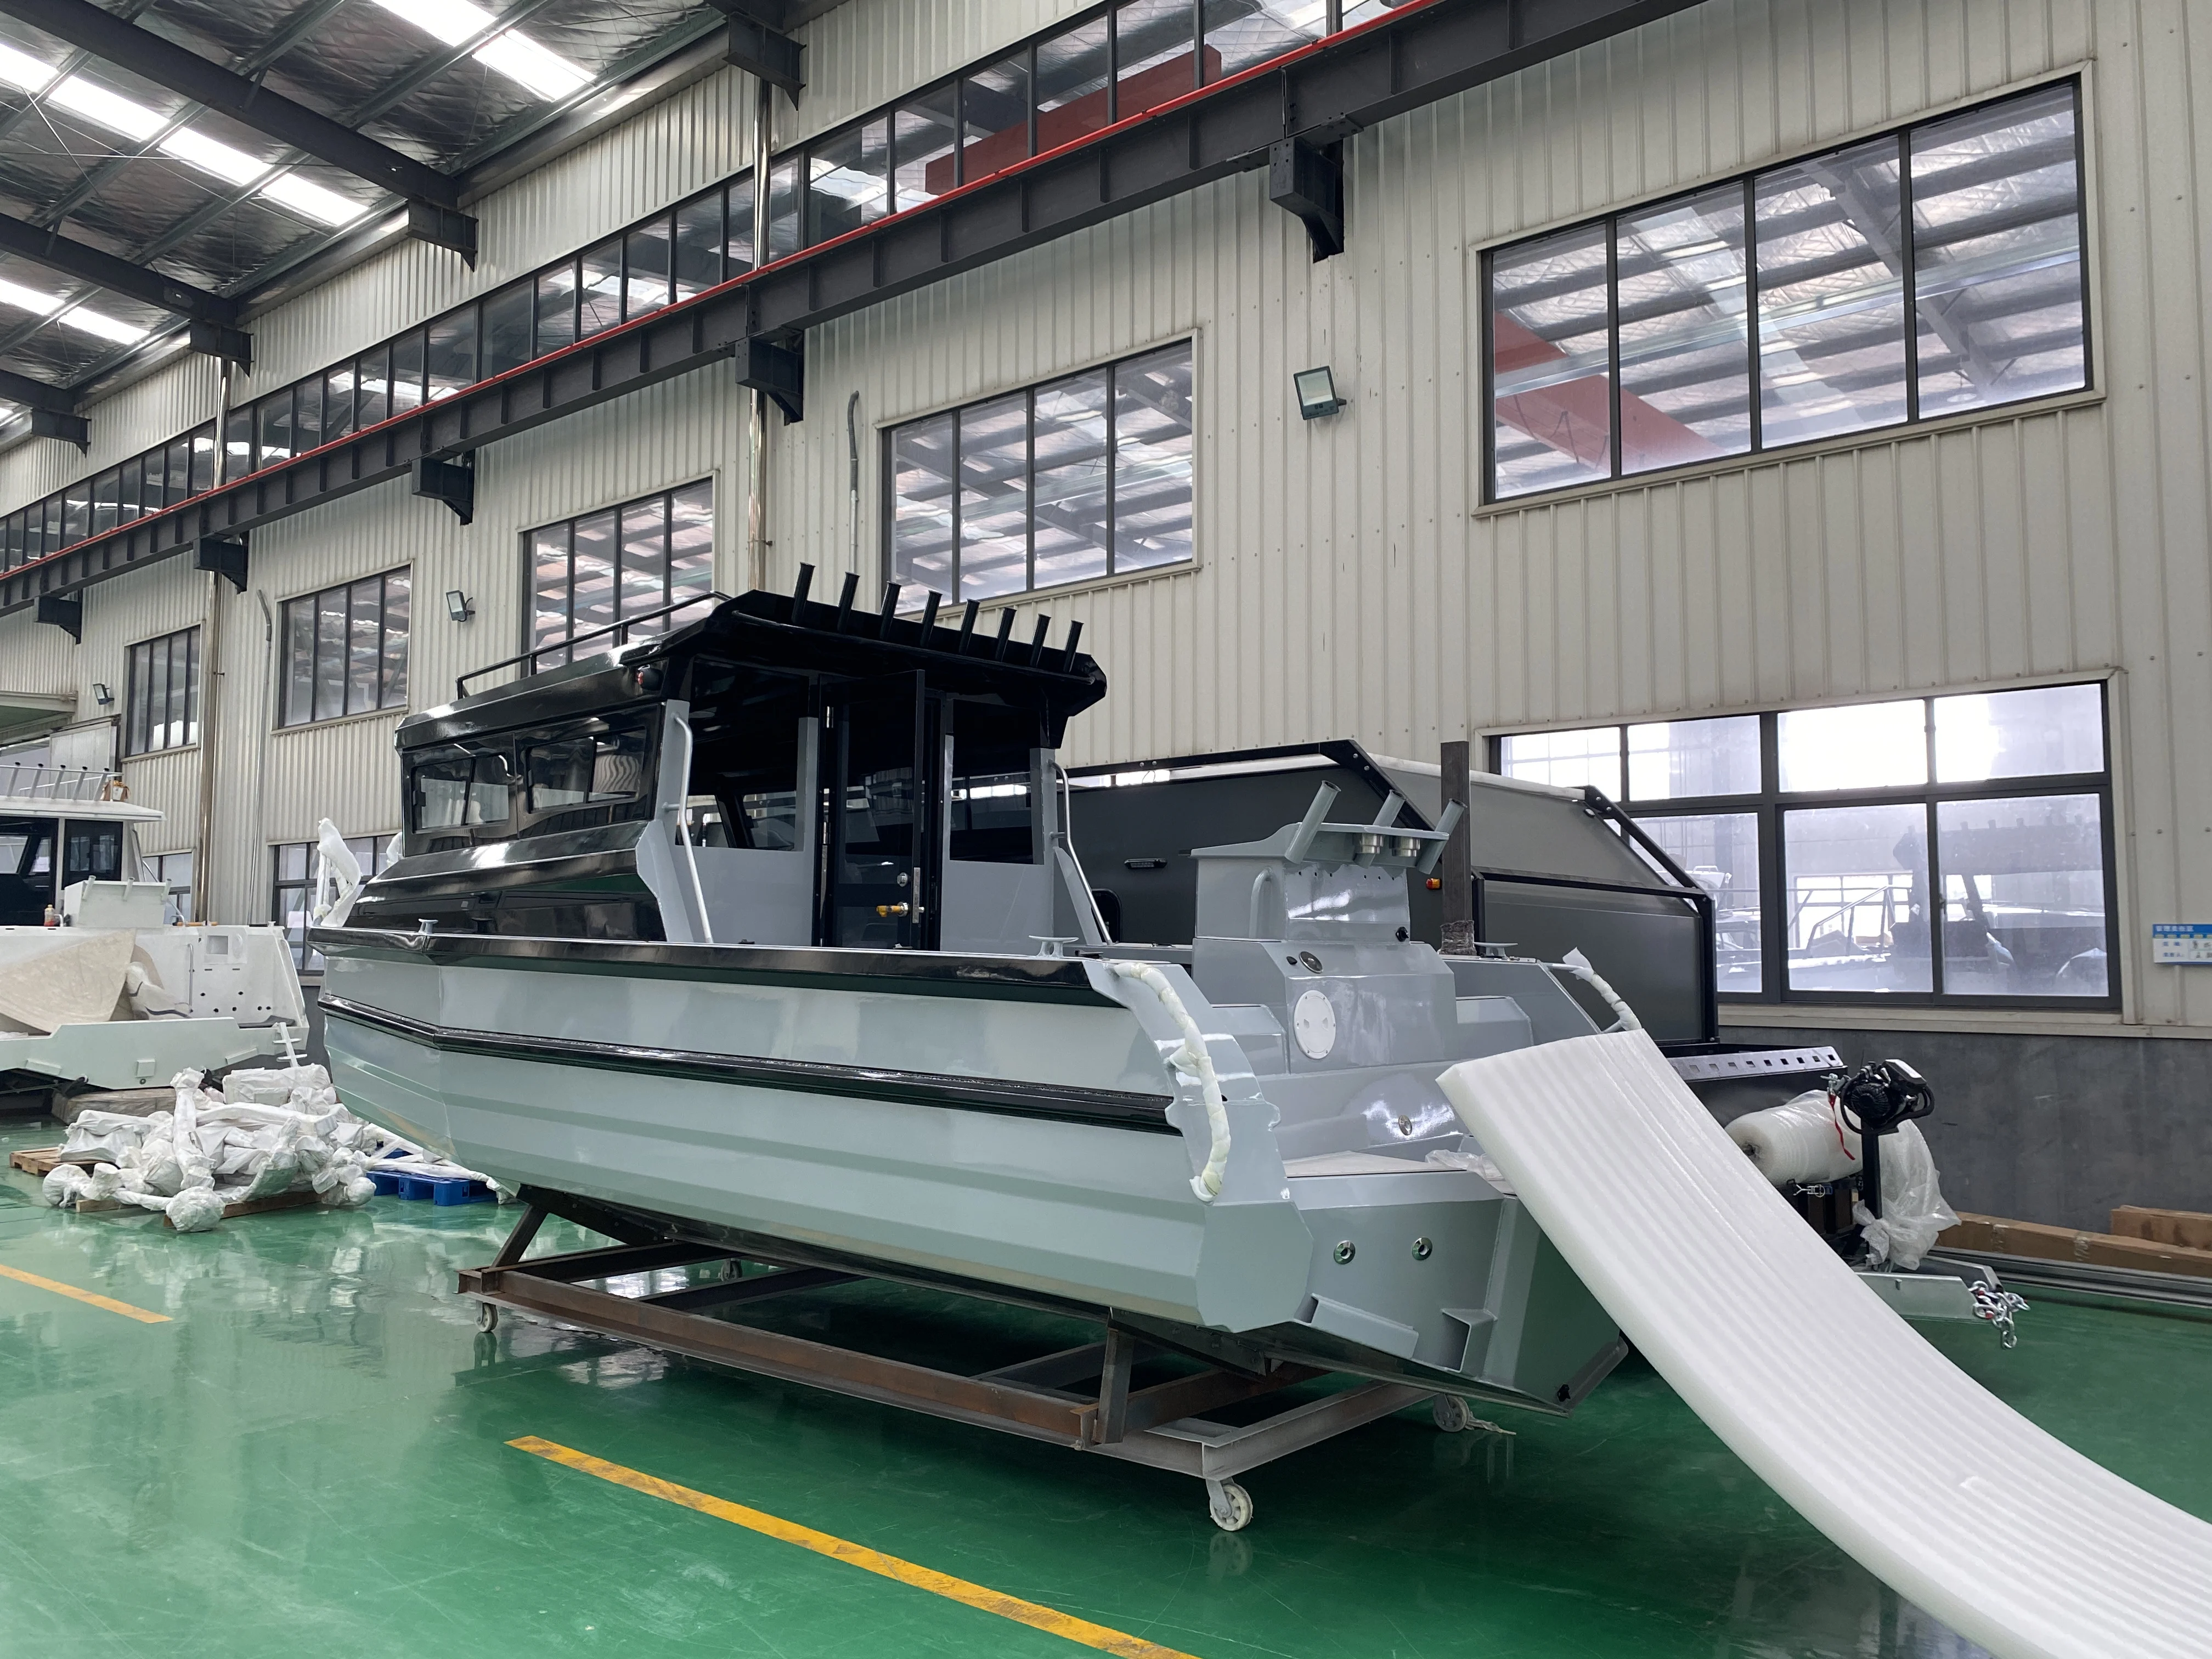 Factory Allsea Easycraft 750 7.5m 25ft Aluminum welded pontoon deep v hull sea fishing boat for sale